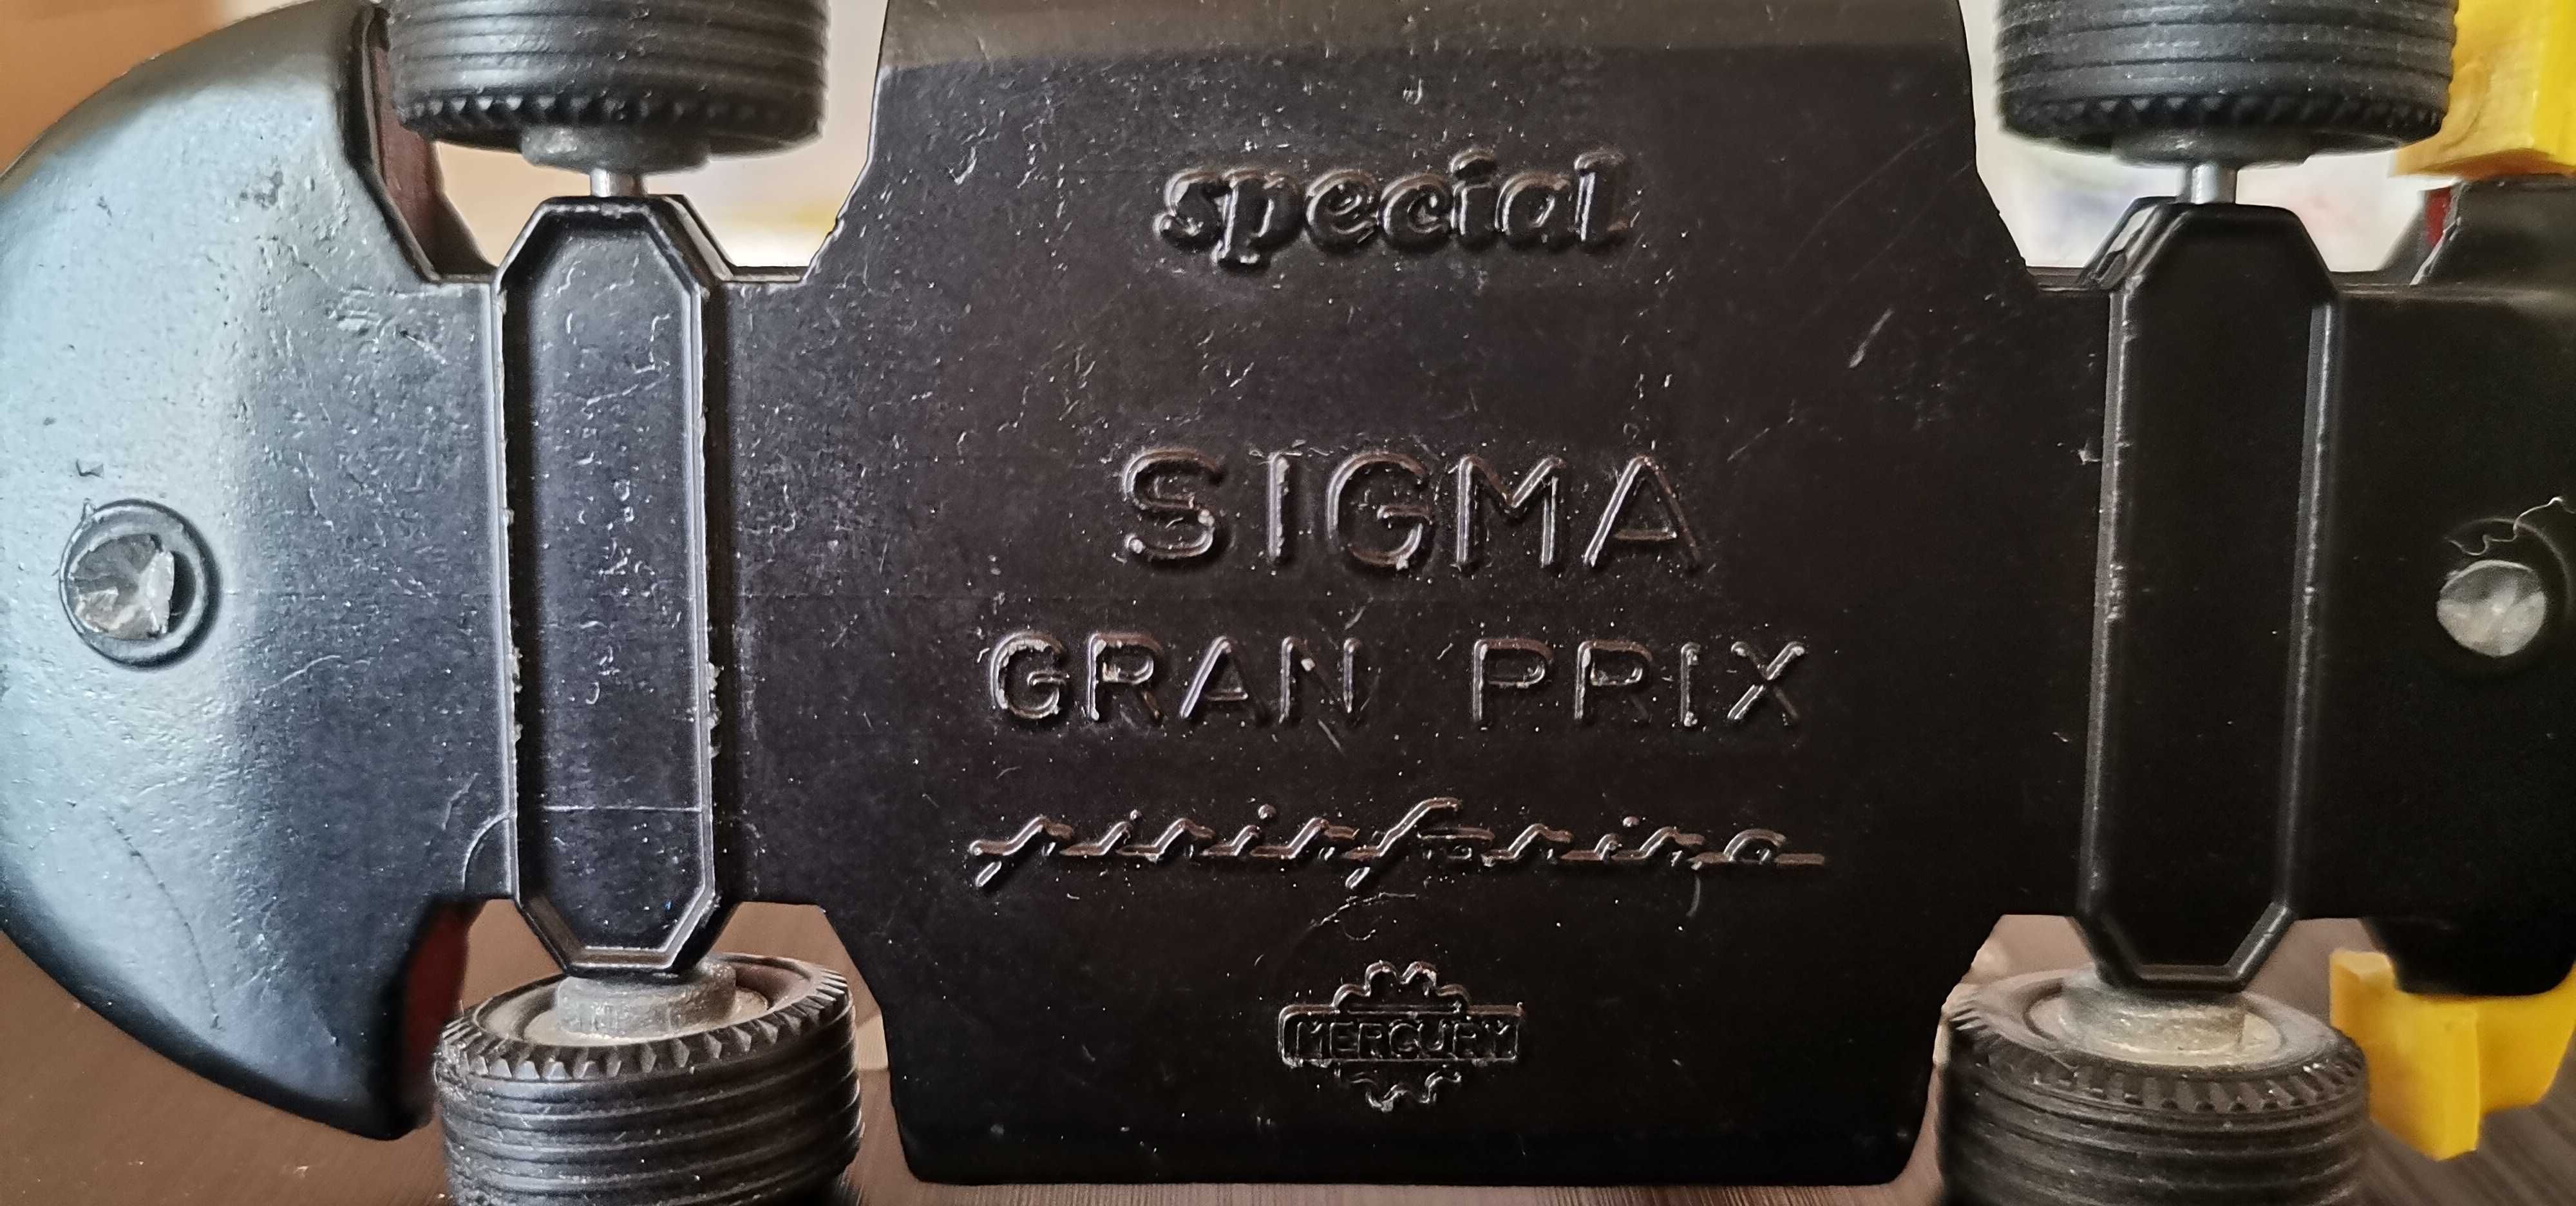 Sigma Gran Prix Special Mercury